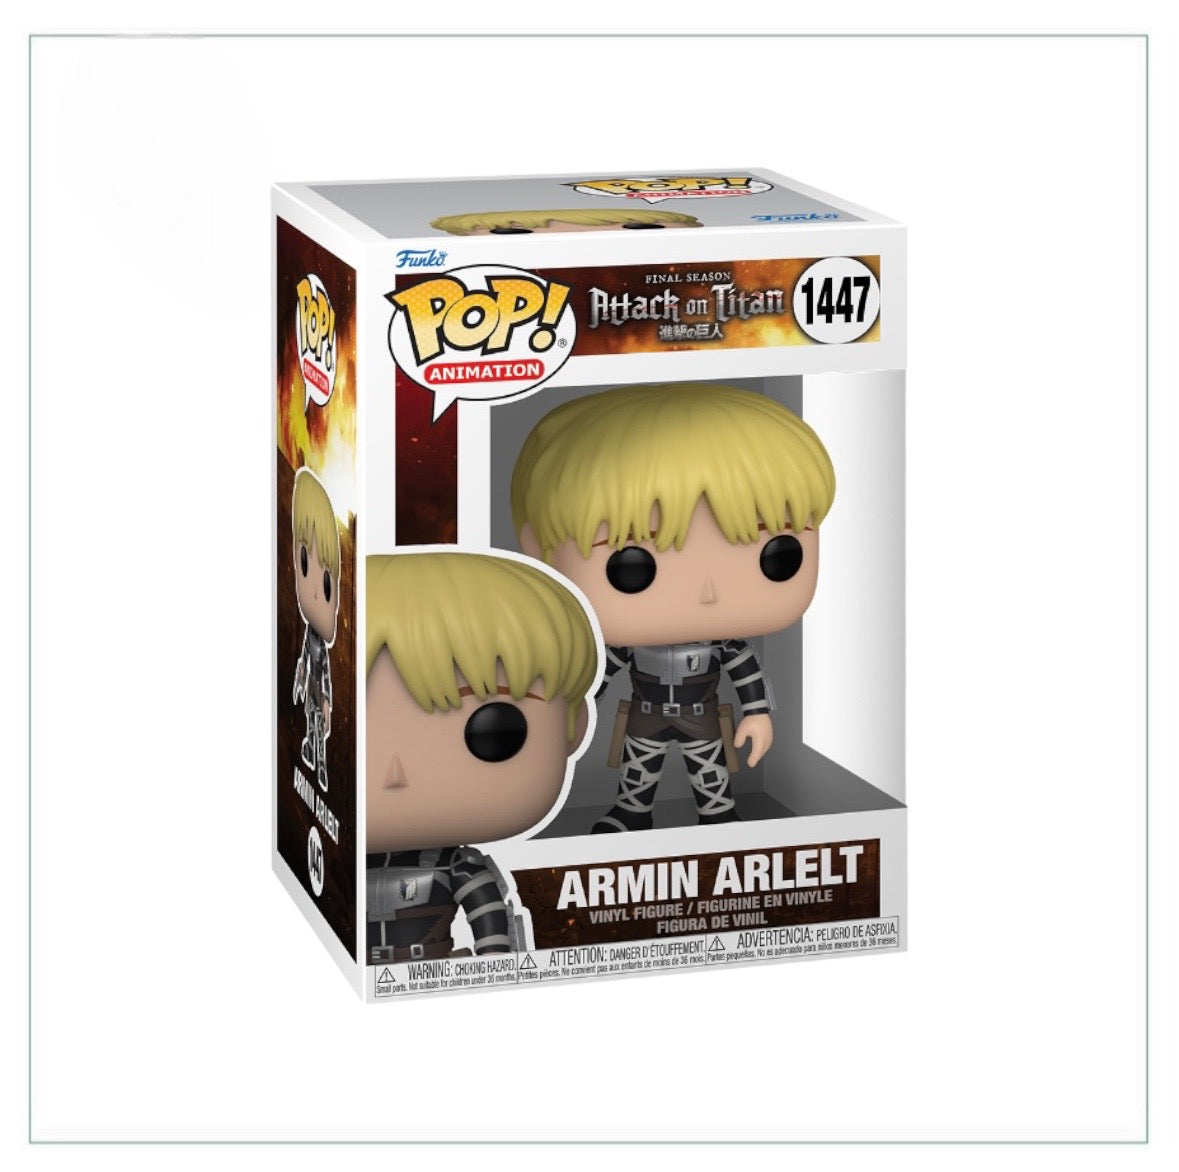 Armin Arlelt #1447 Funko Pop! - Attack on Titan - PREORDER